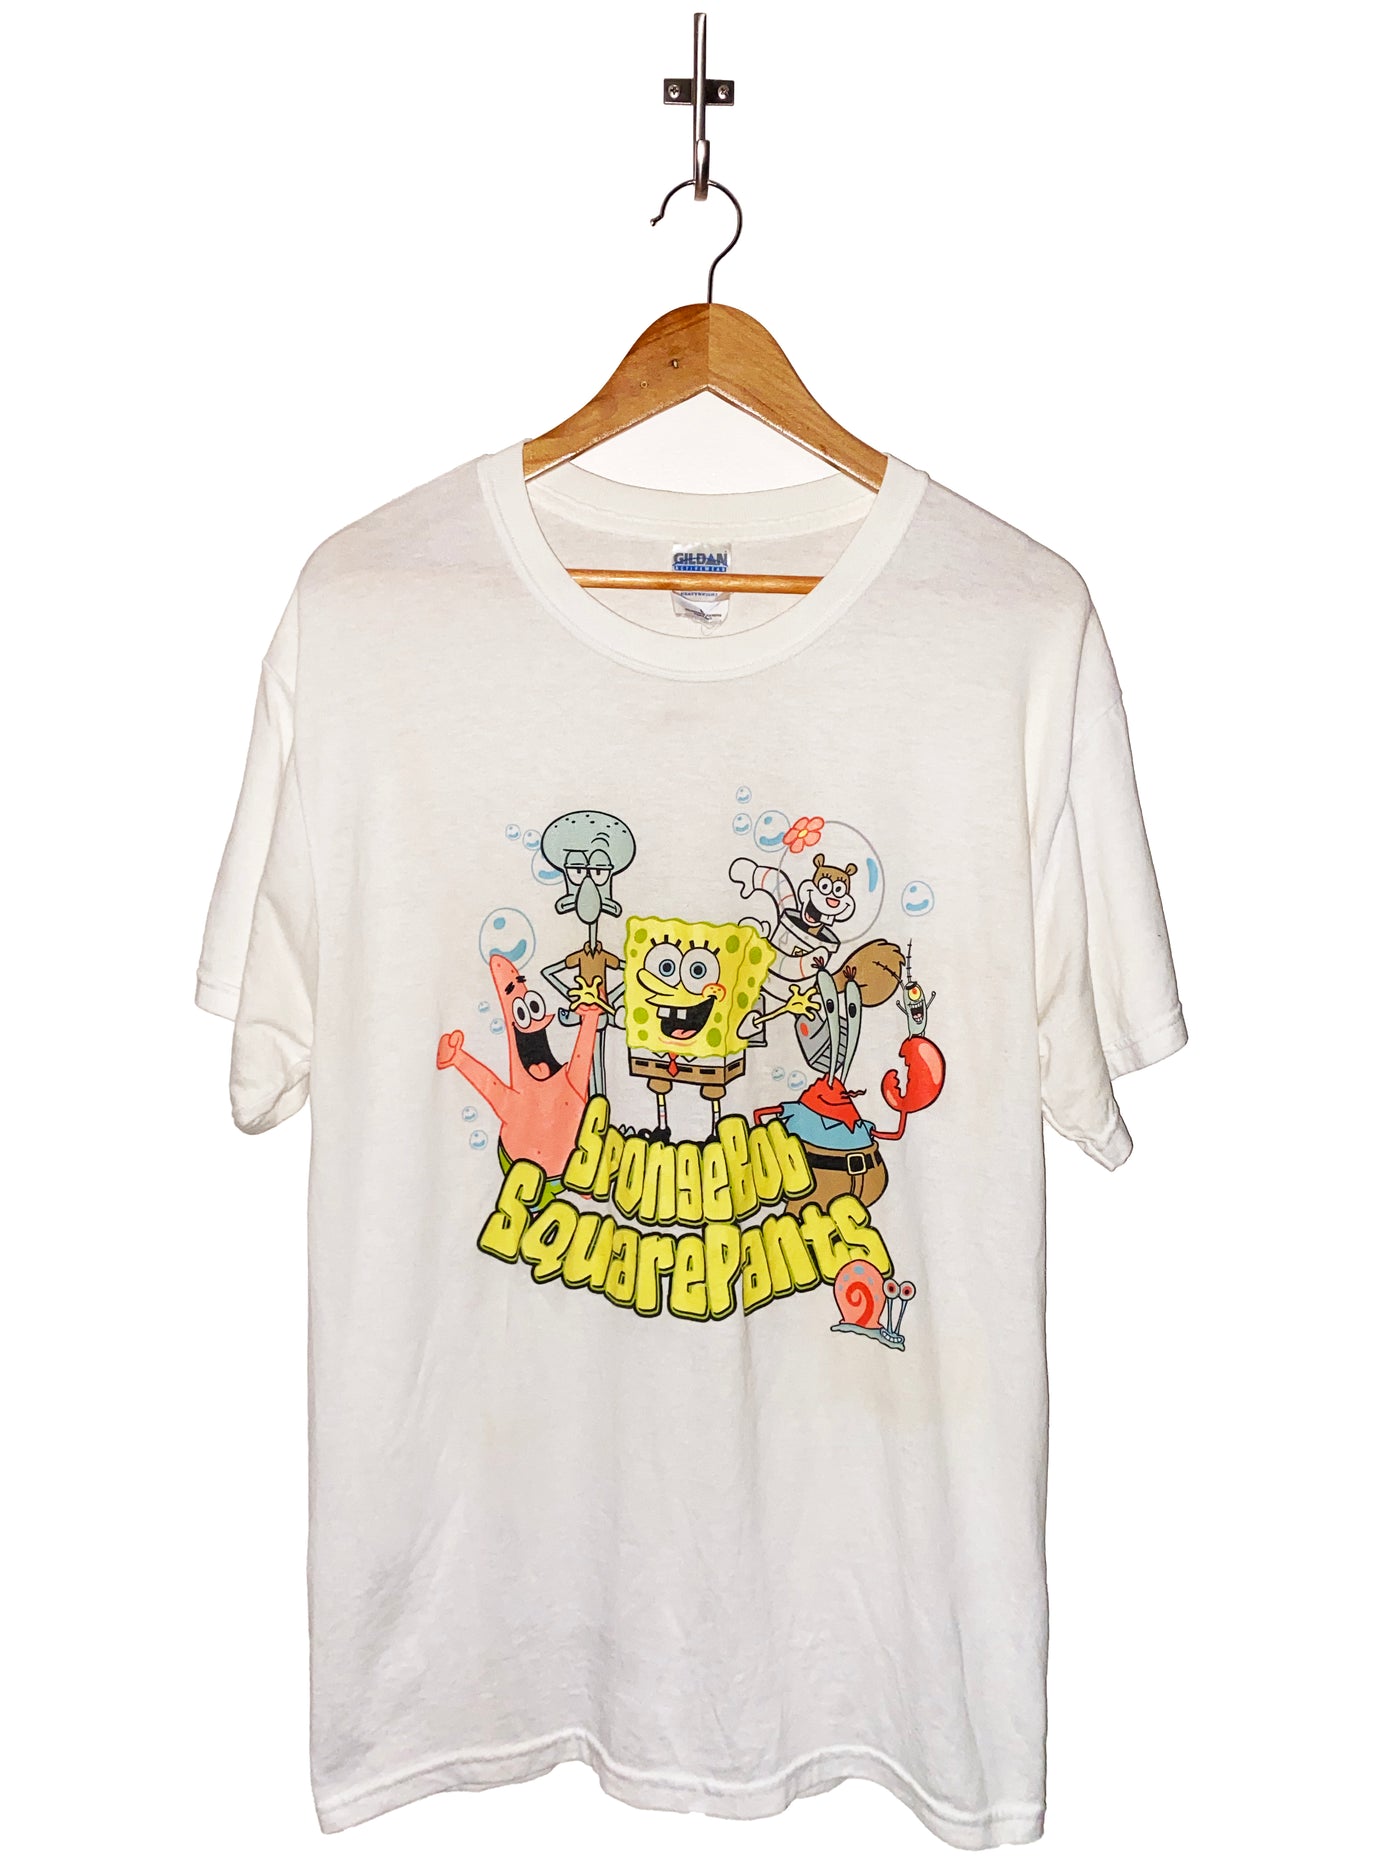 Vintage Spongebob Squarepants T-Shirt